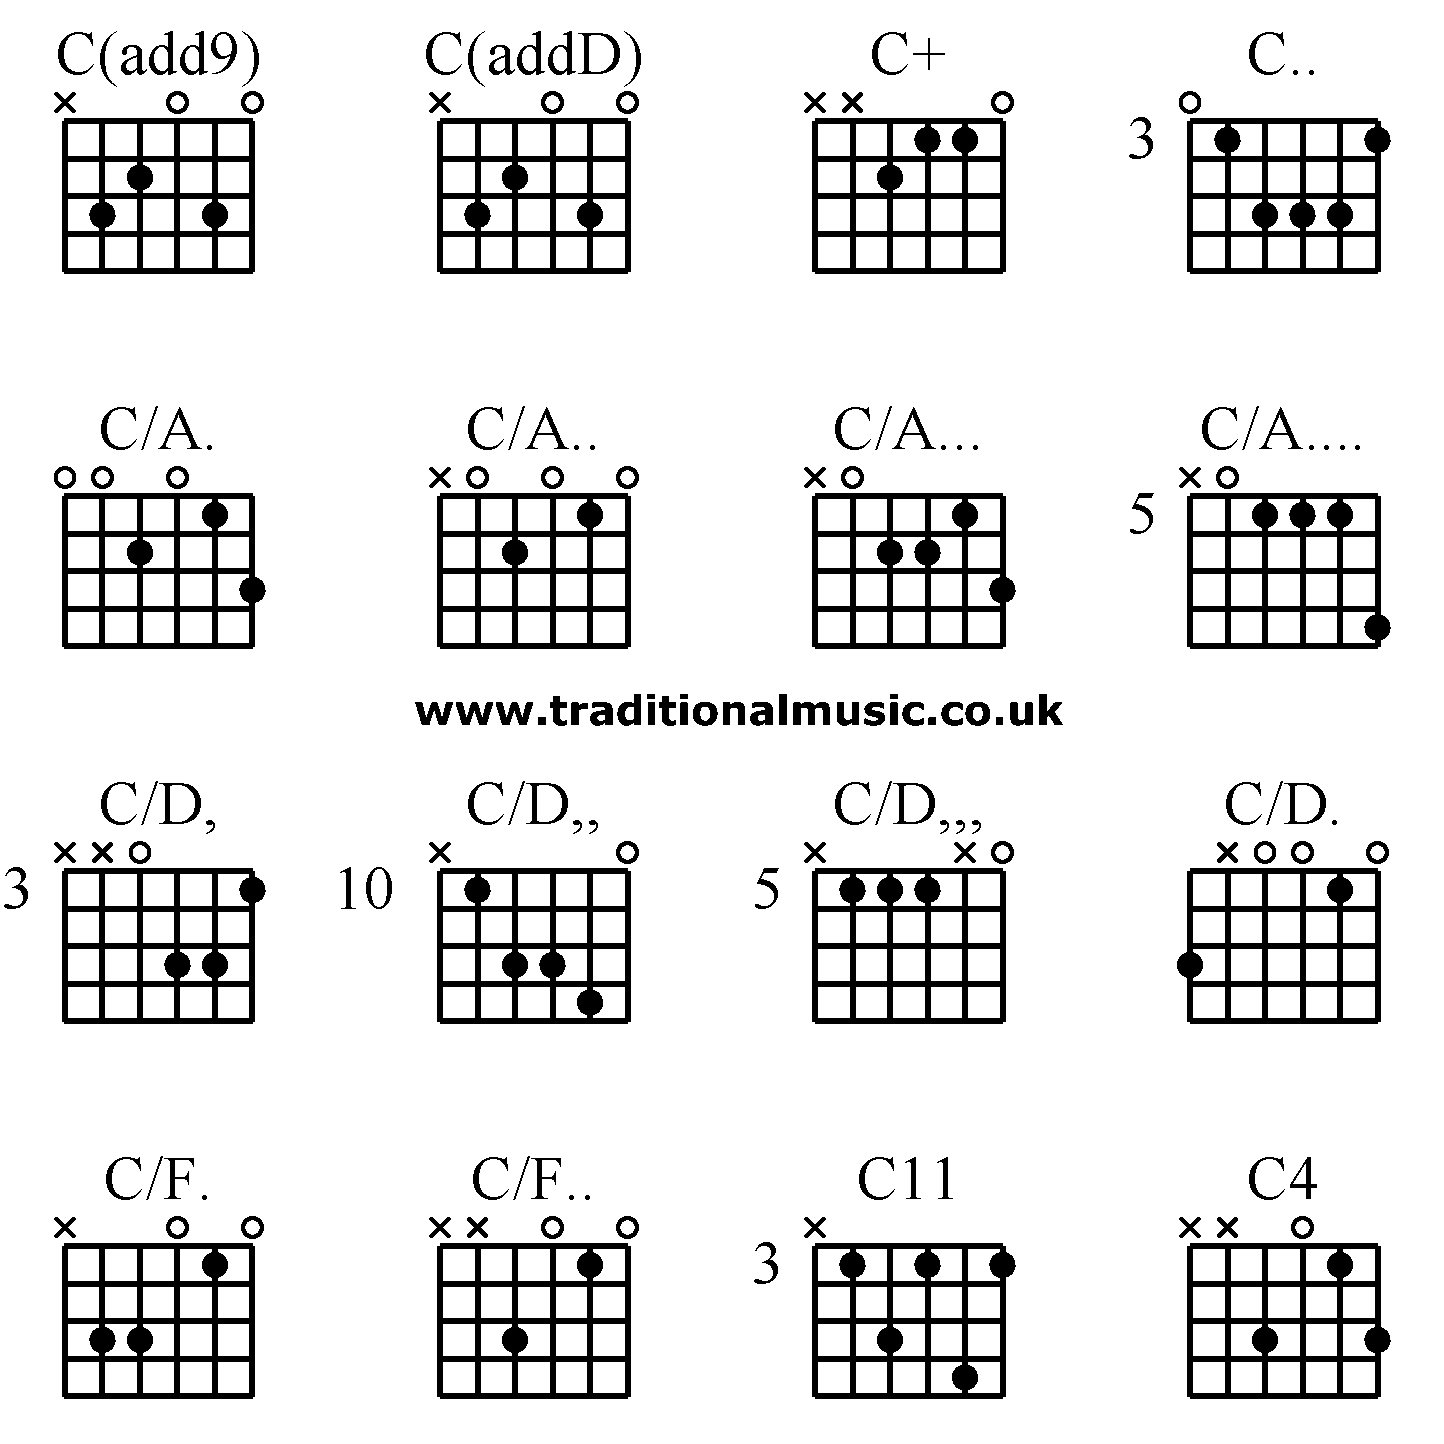 Chords On Guitar Guitar Chords Advanced Cadd9 Caddd C C Ca Ca Ca Ca